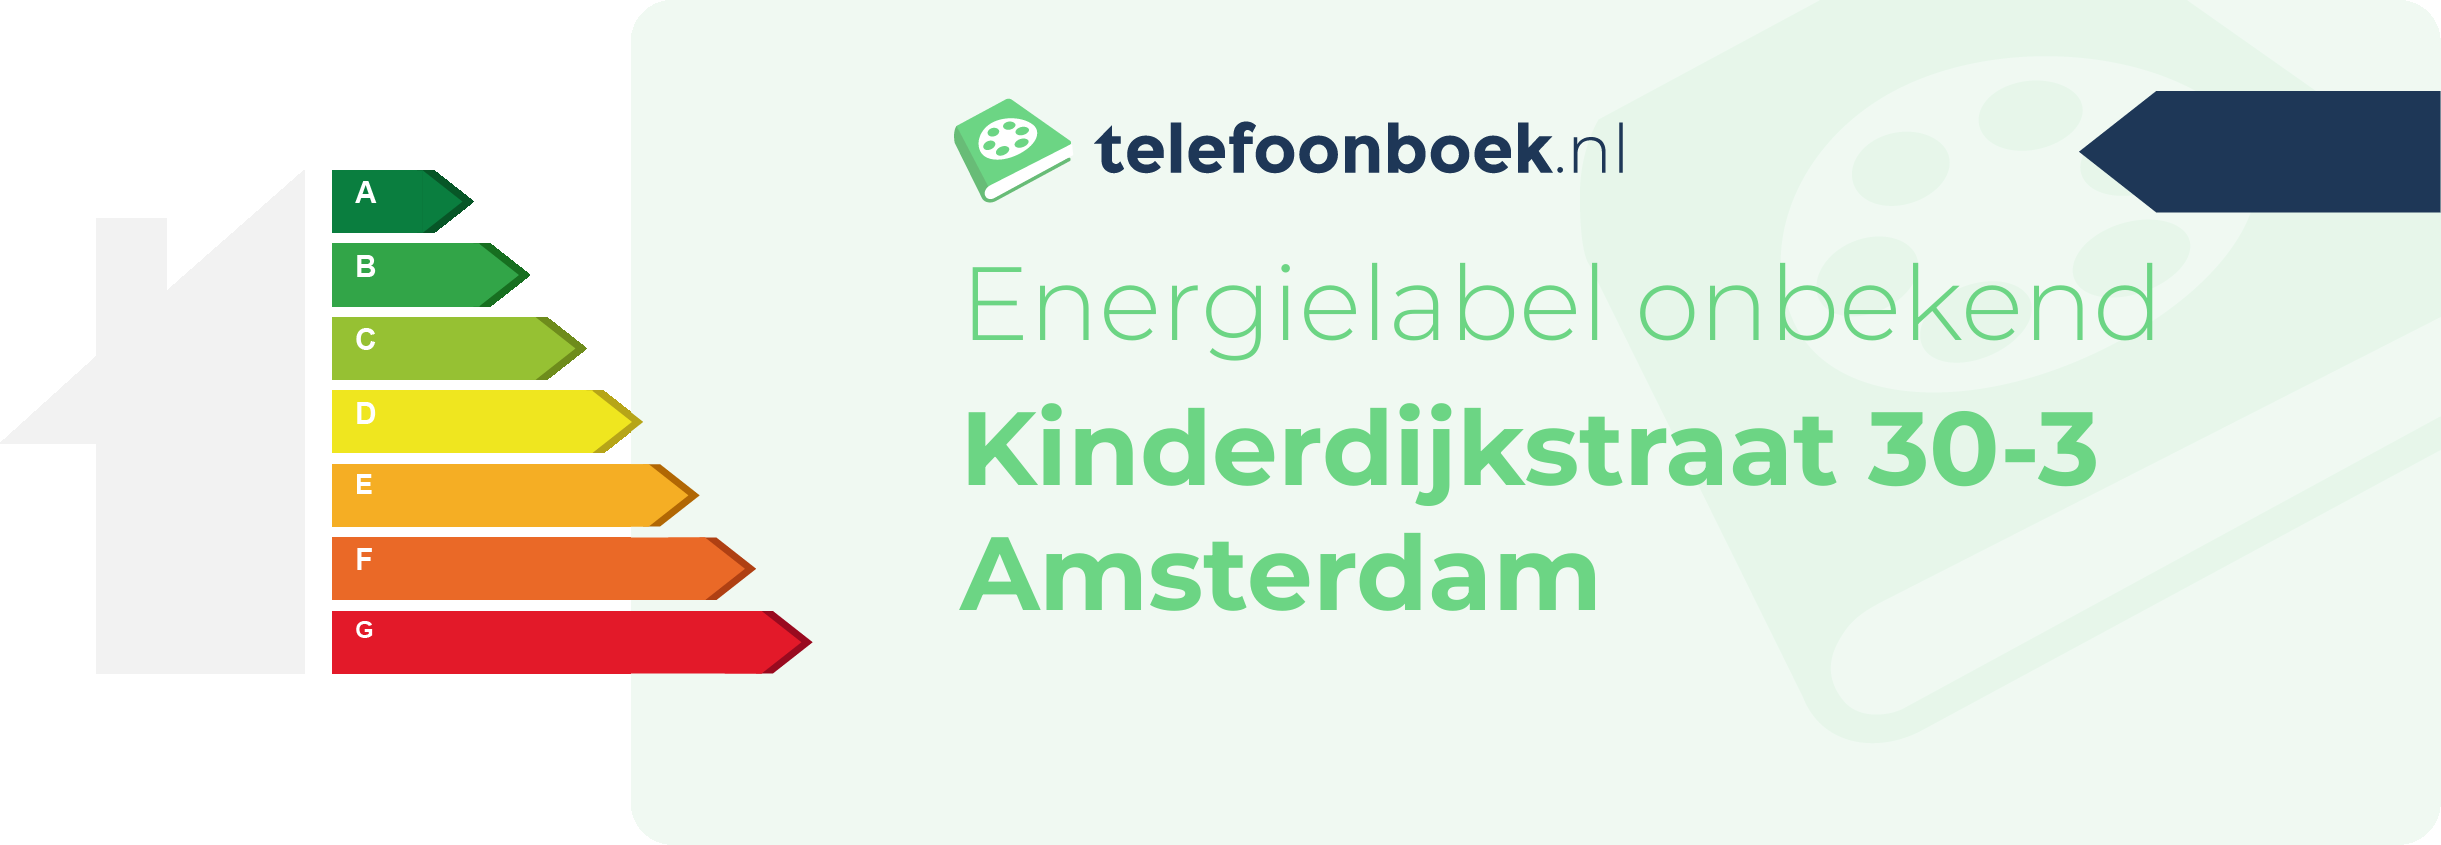 Energielabel Kinderdijkstraat 30-3 Amsterdam